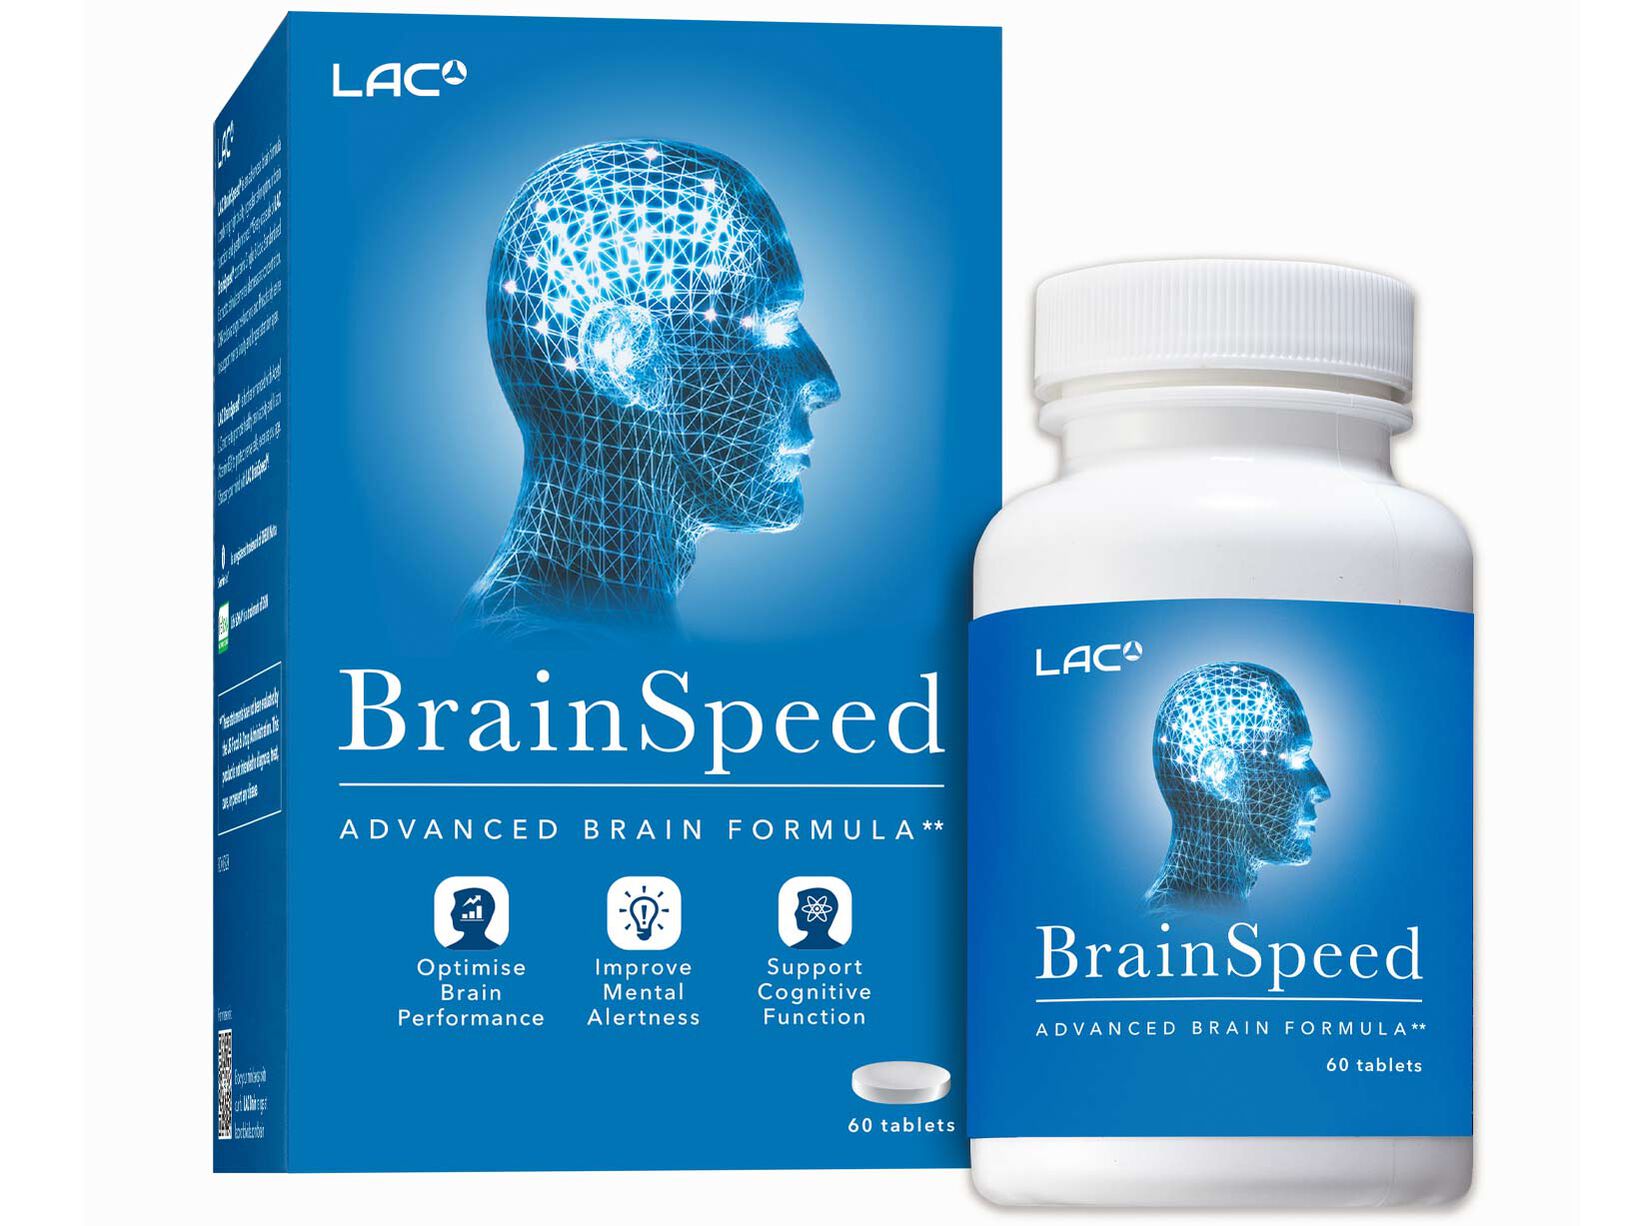 LAC BrainSpeed